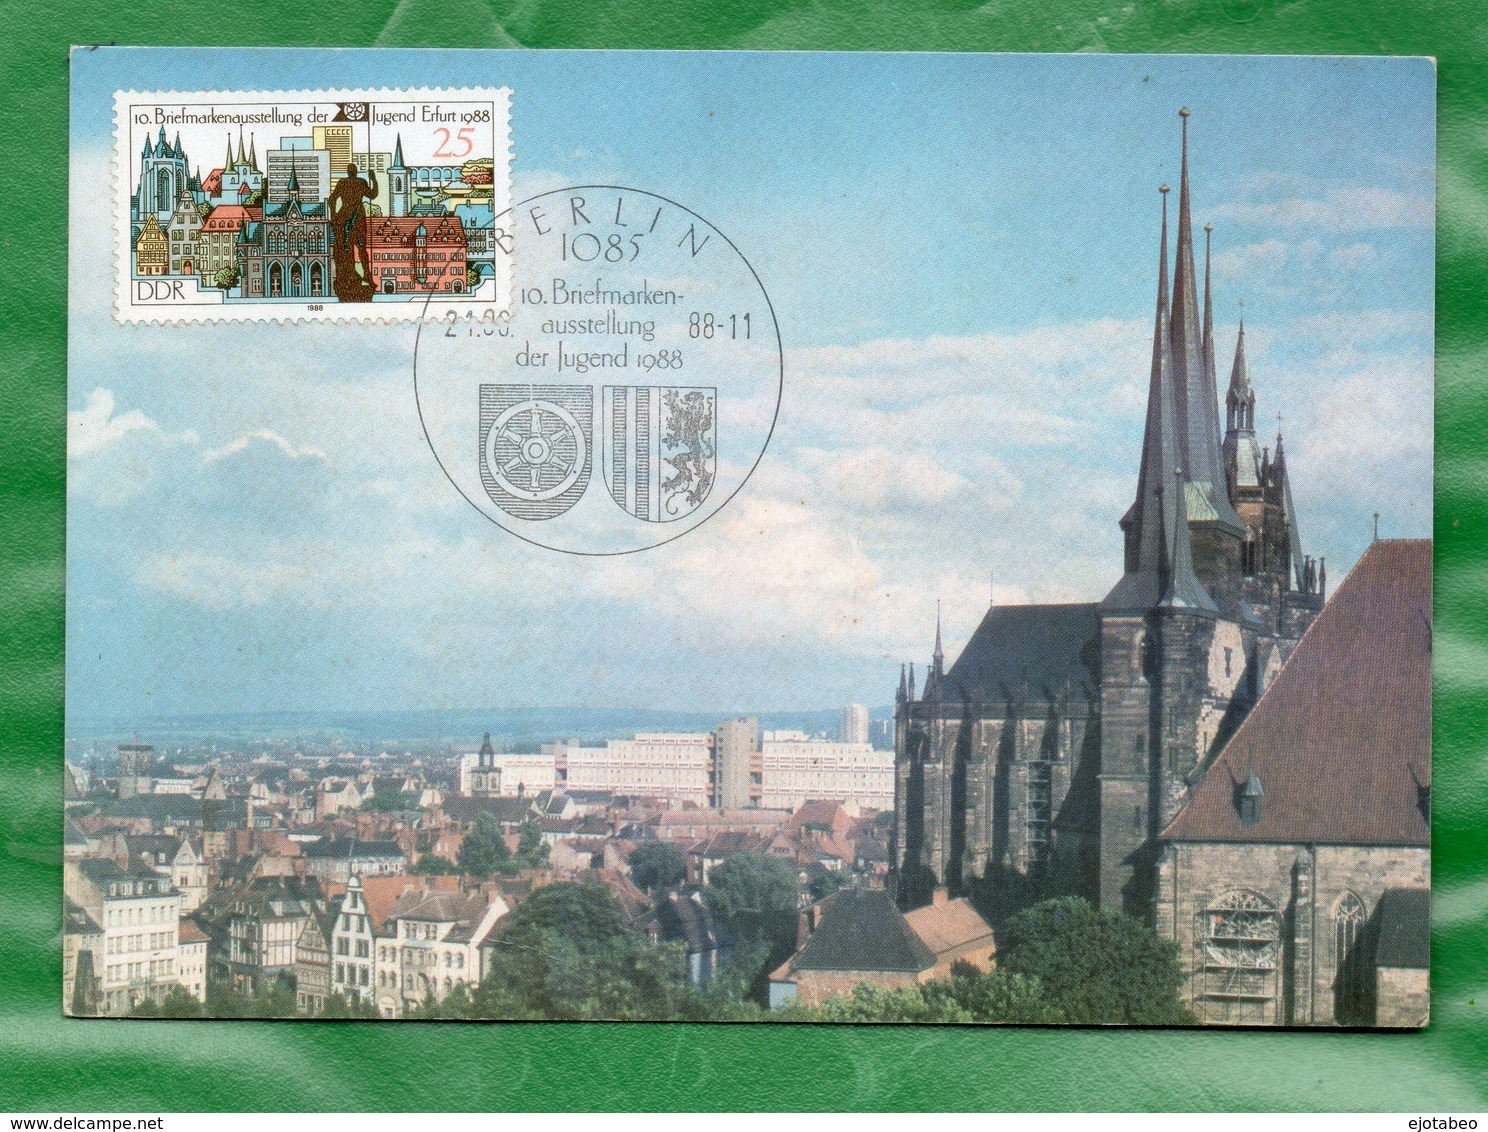 99 ALEMANIA-1988  Berlin  Tarjeta Máxima-10 Briefmarkenausstellung Der Jugend 1988-Erfurt ( VEB PHILATELIE WERMSDORF) - Wilmersdorf